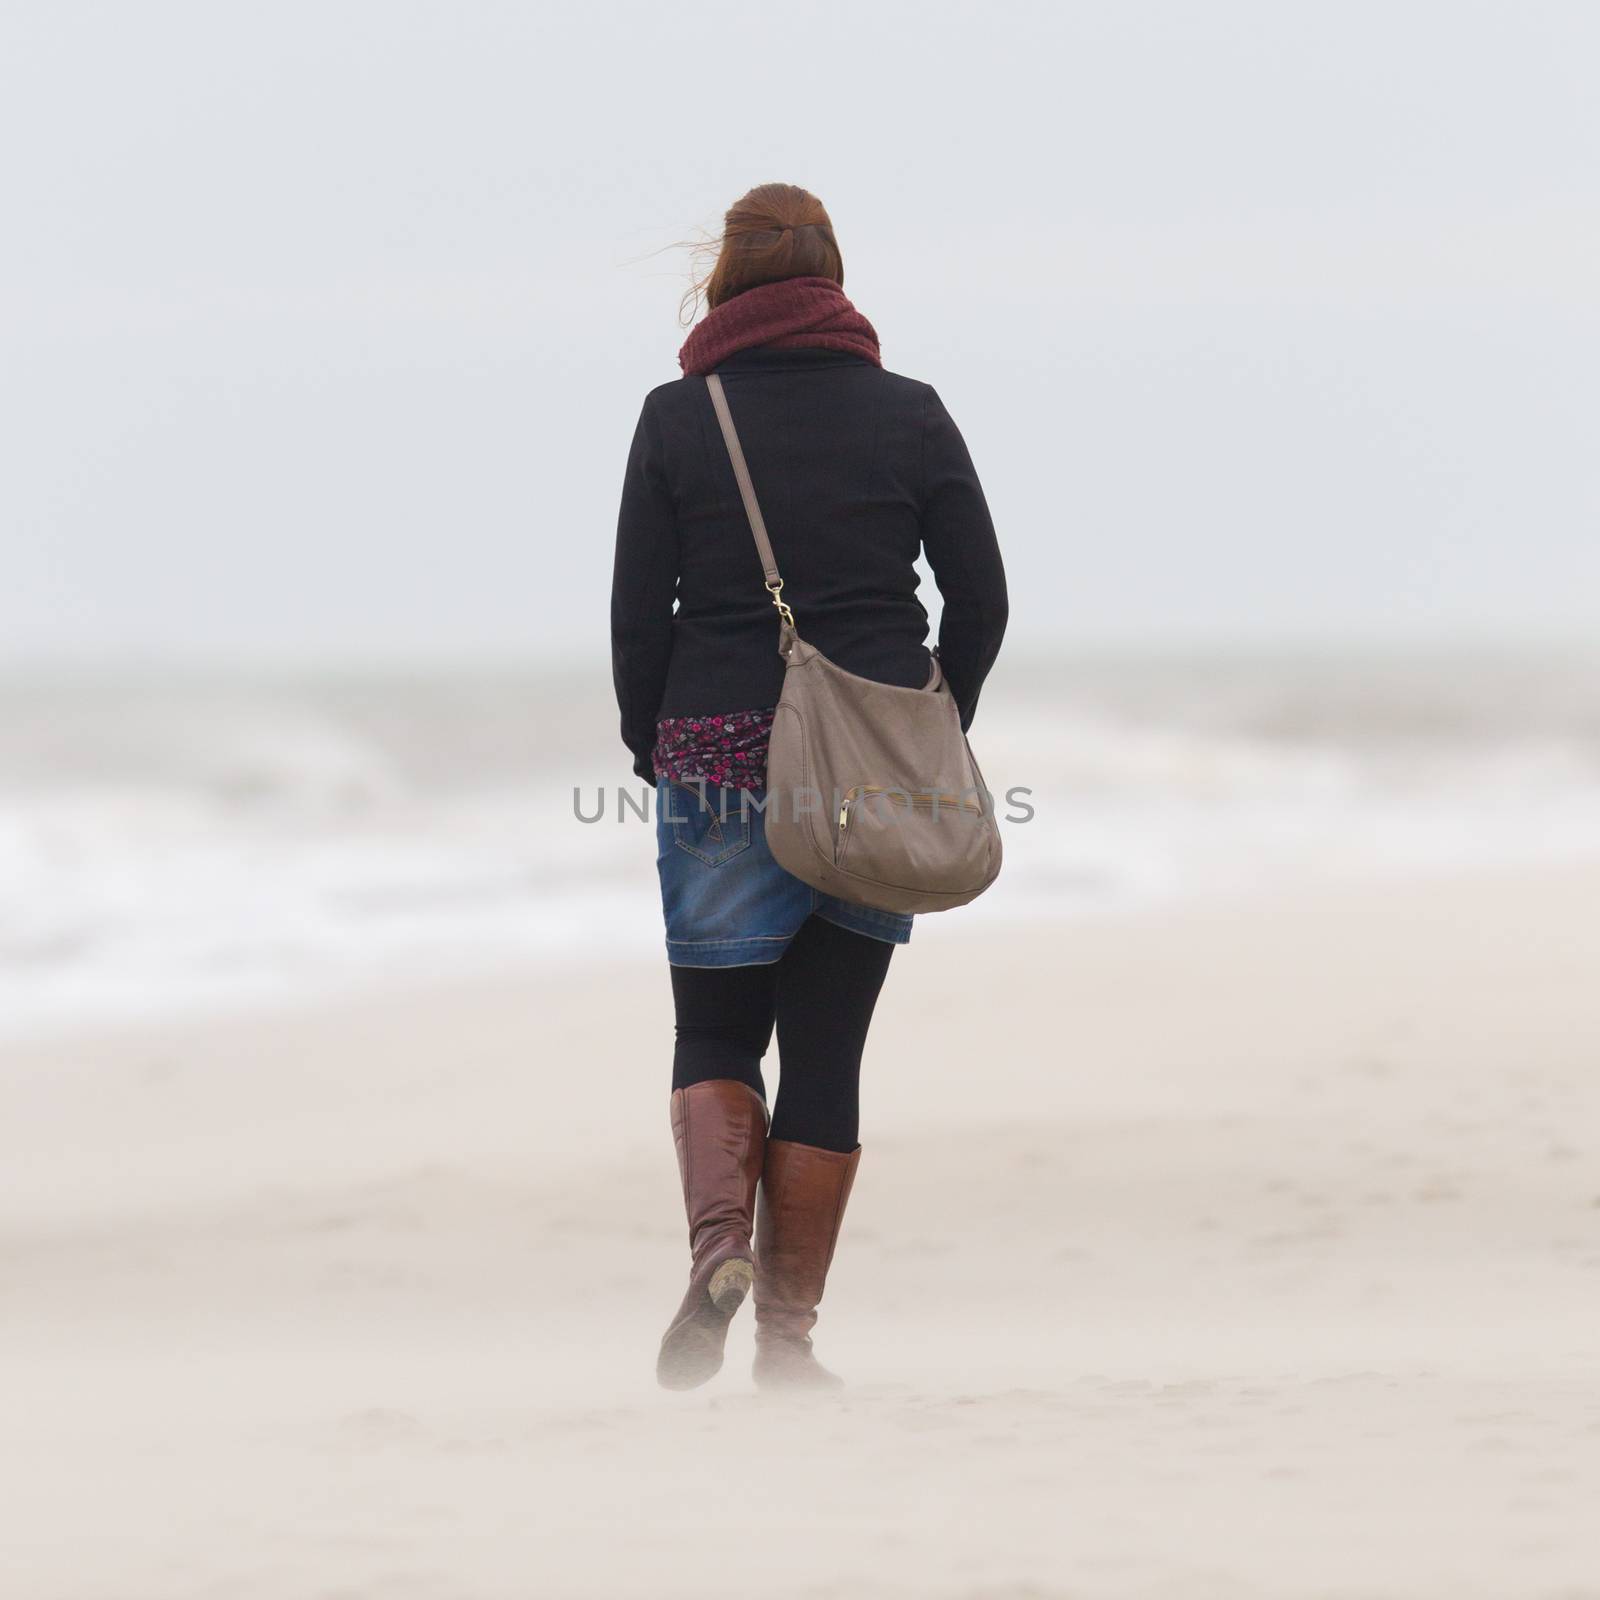 Woman on beach by michaklootwijk